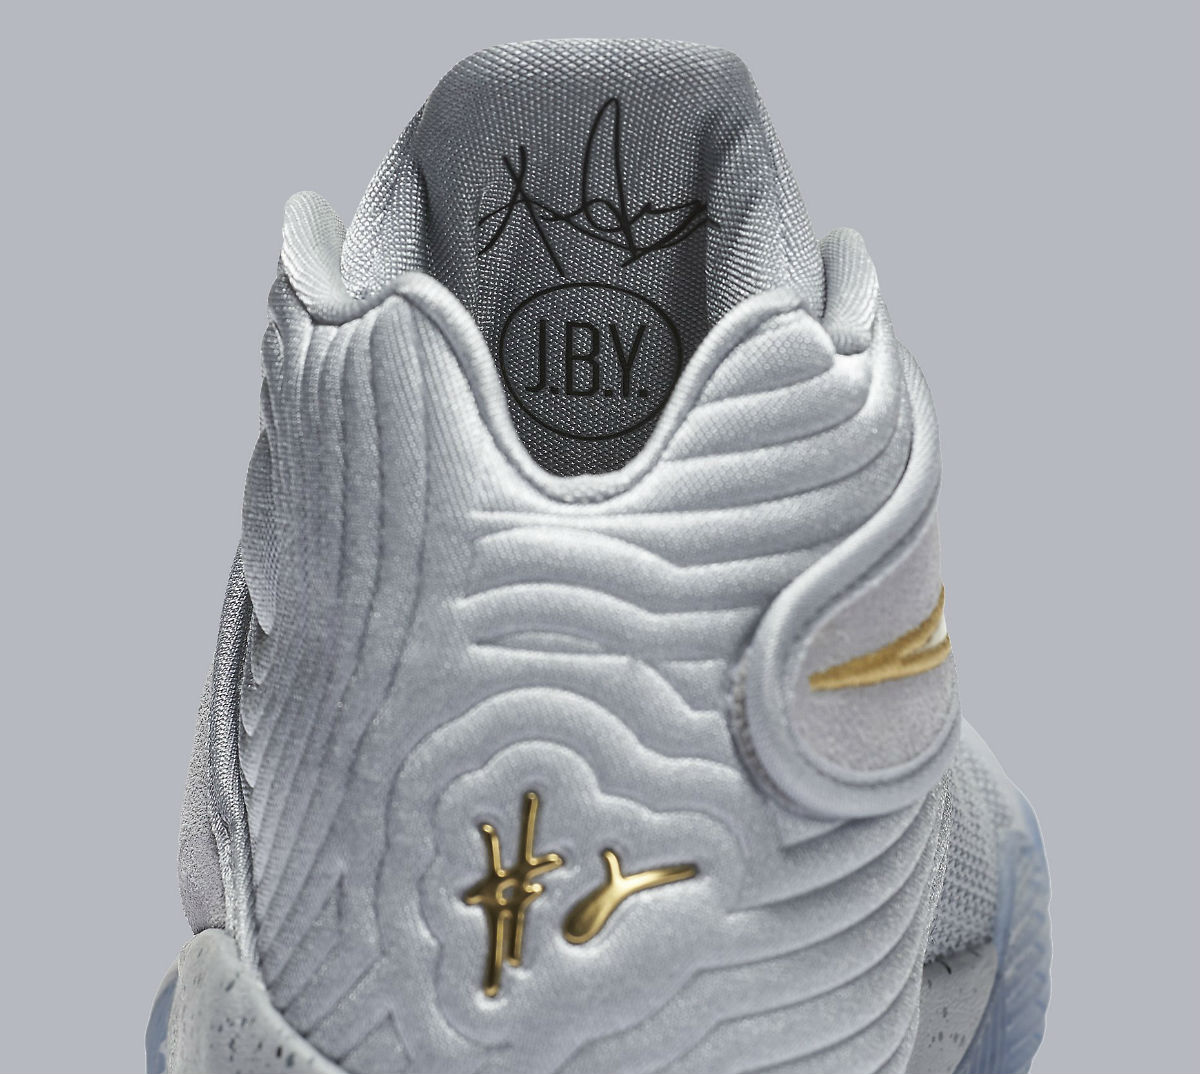 Nike Kyrie 2 Battle Grey Detail 819583-005